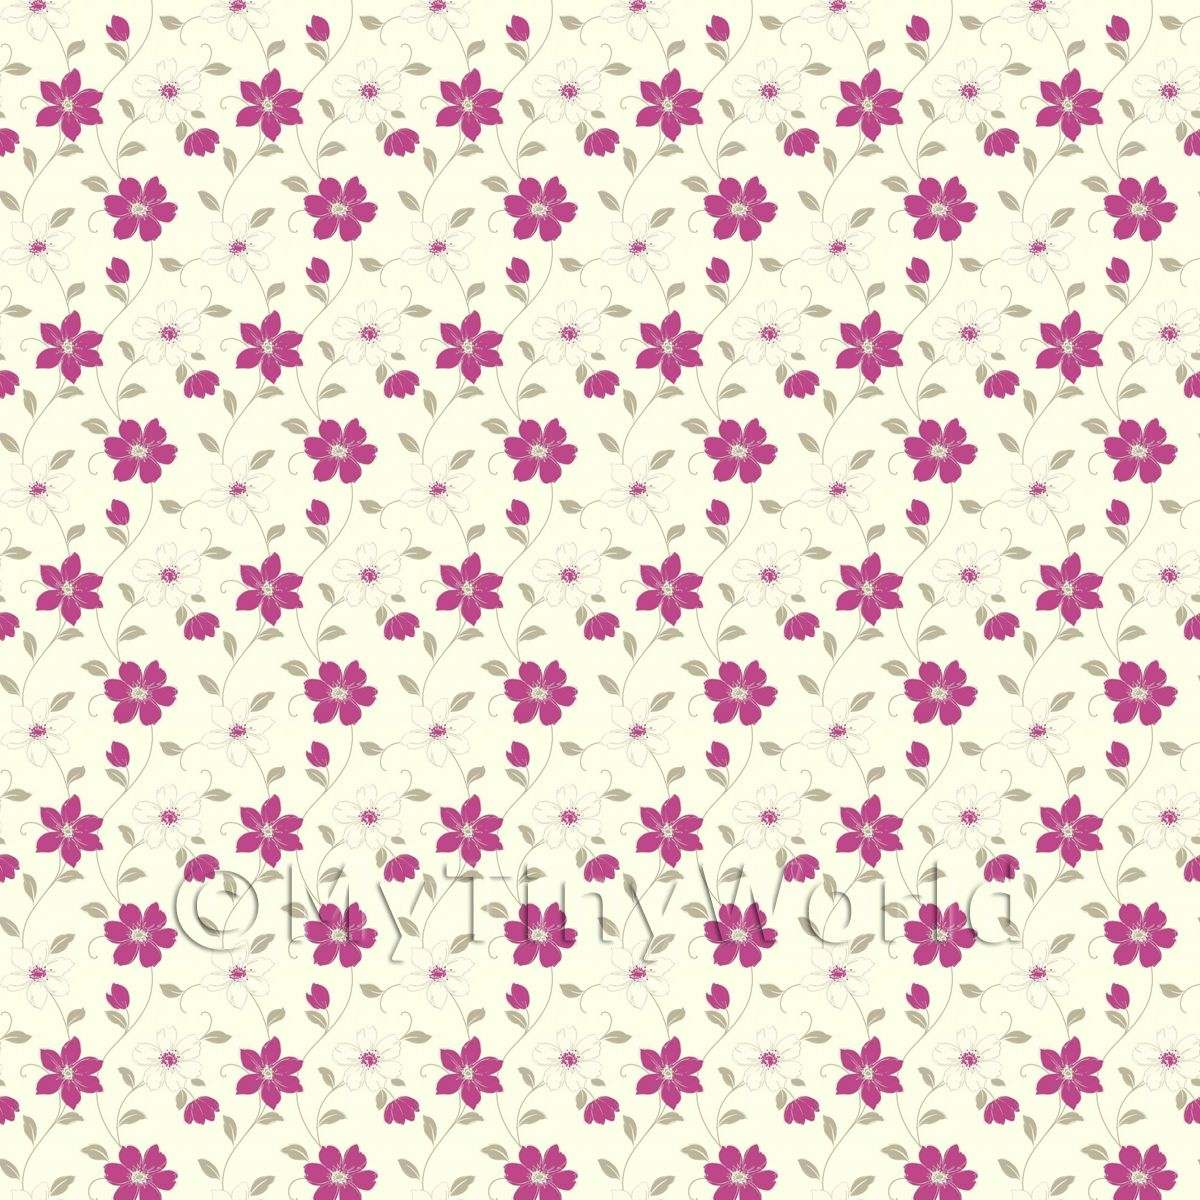 30 Hearts & Flowers 71D23 dollhouse wallpaper 1pc 